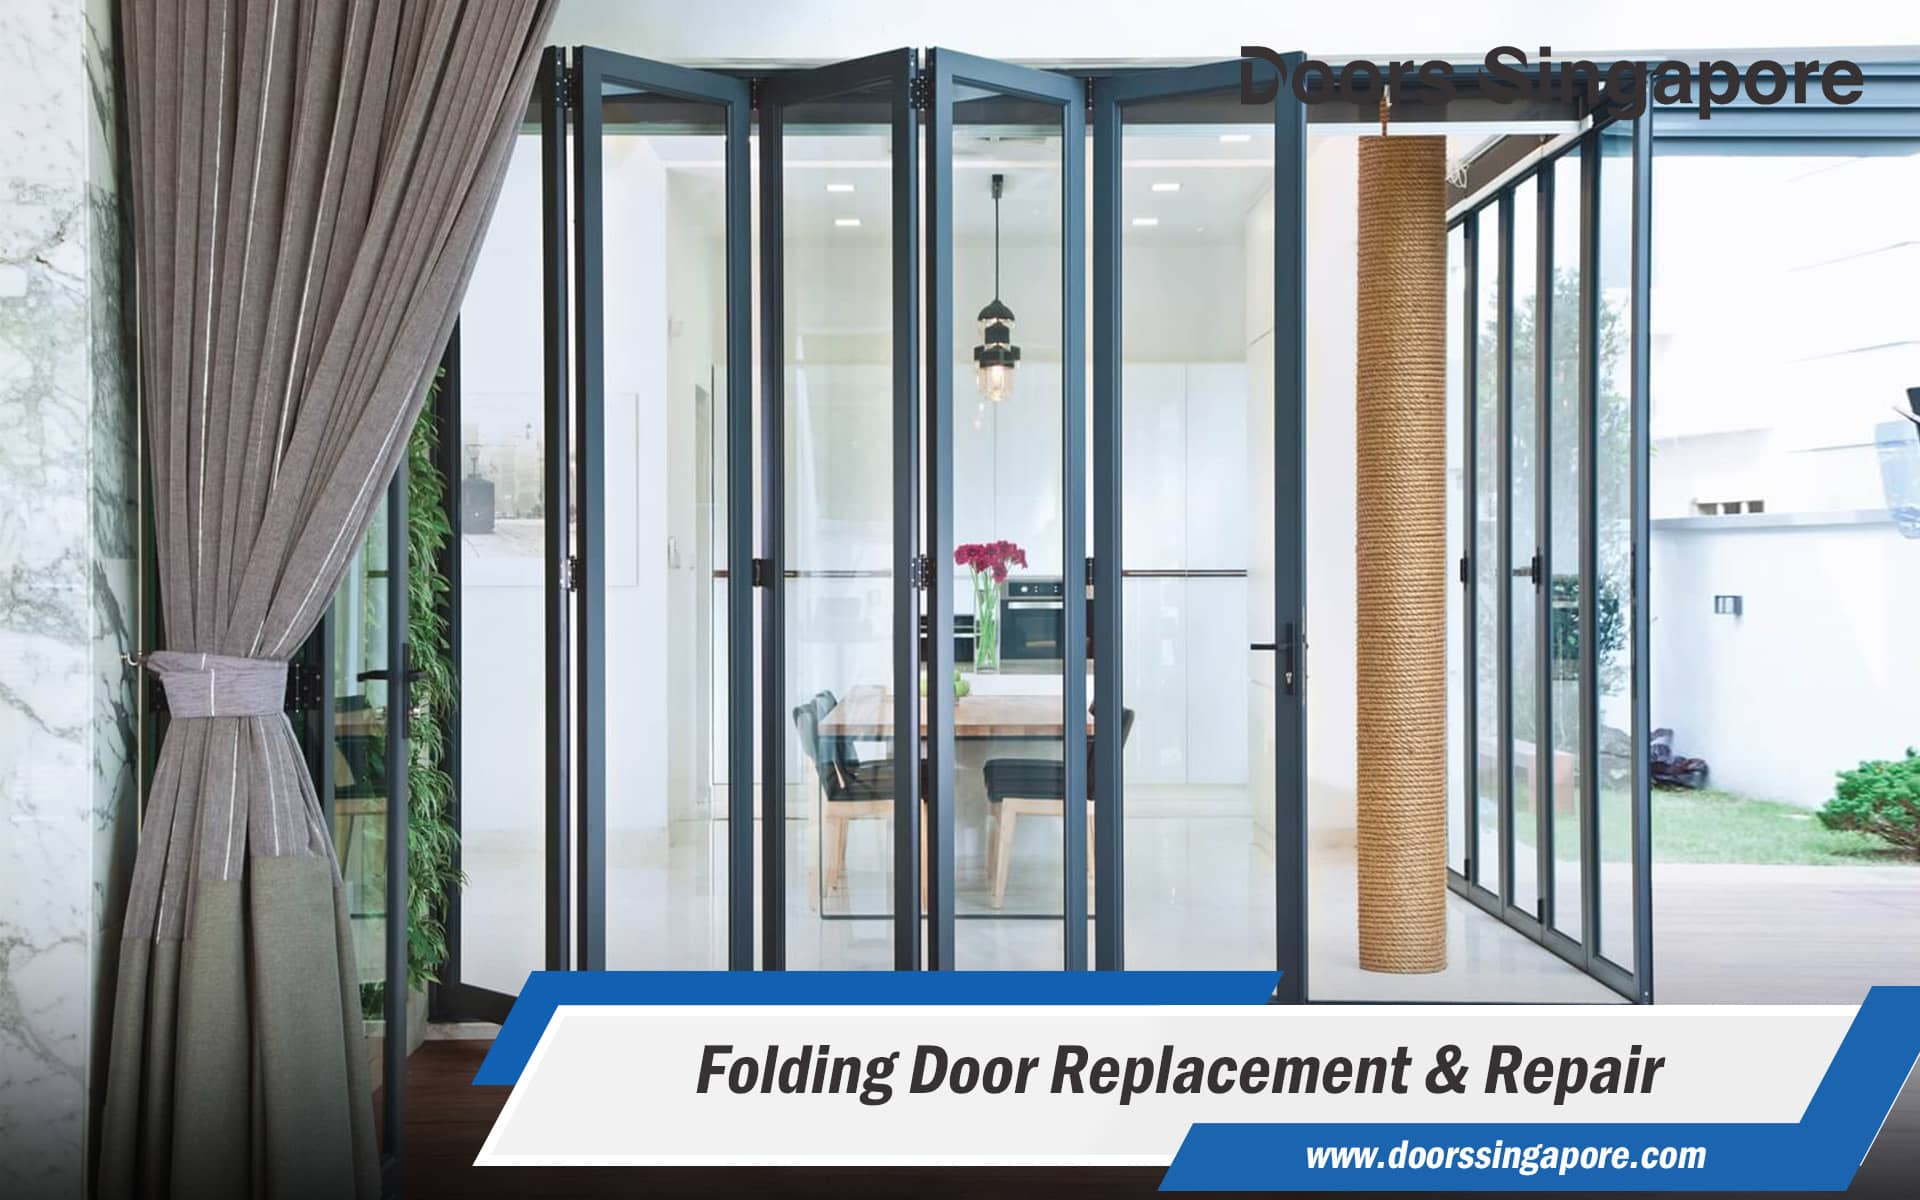 Folding Door Replacement & Repair